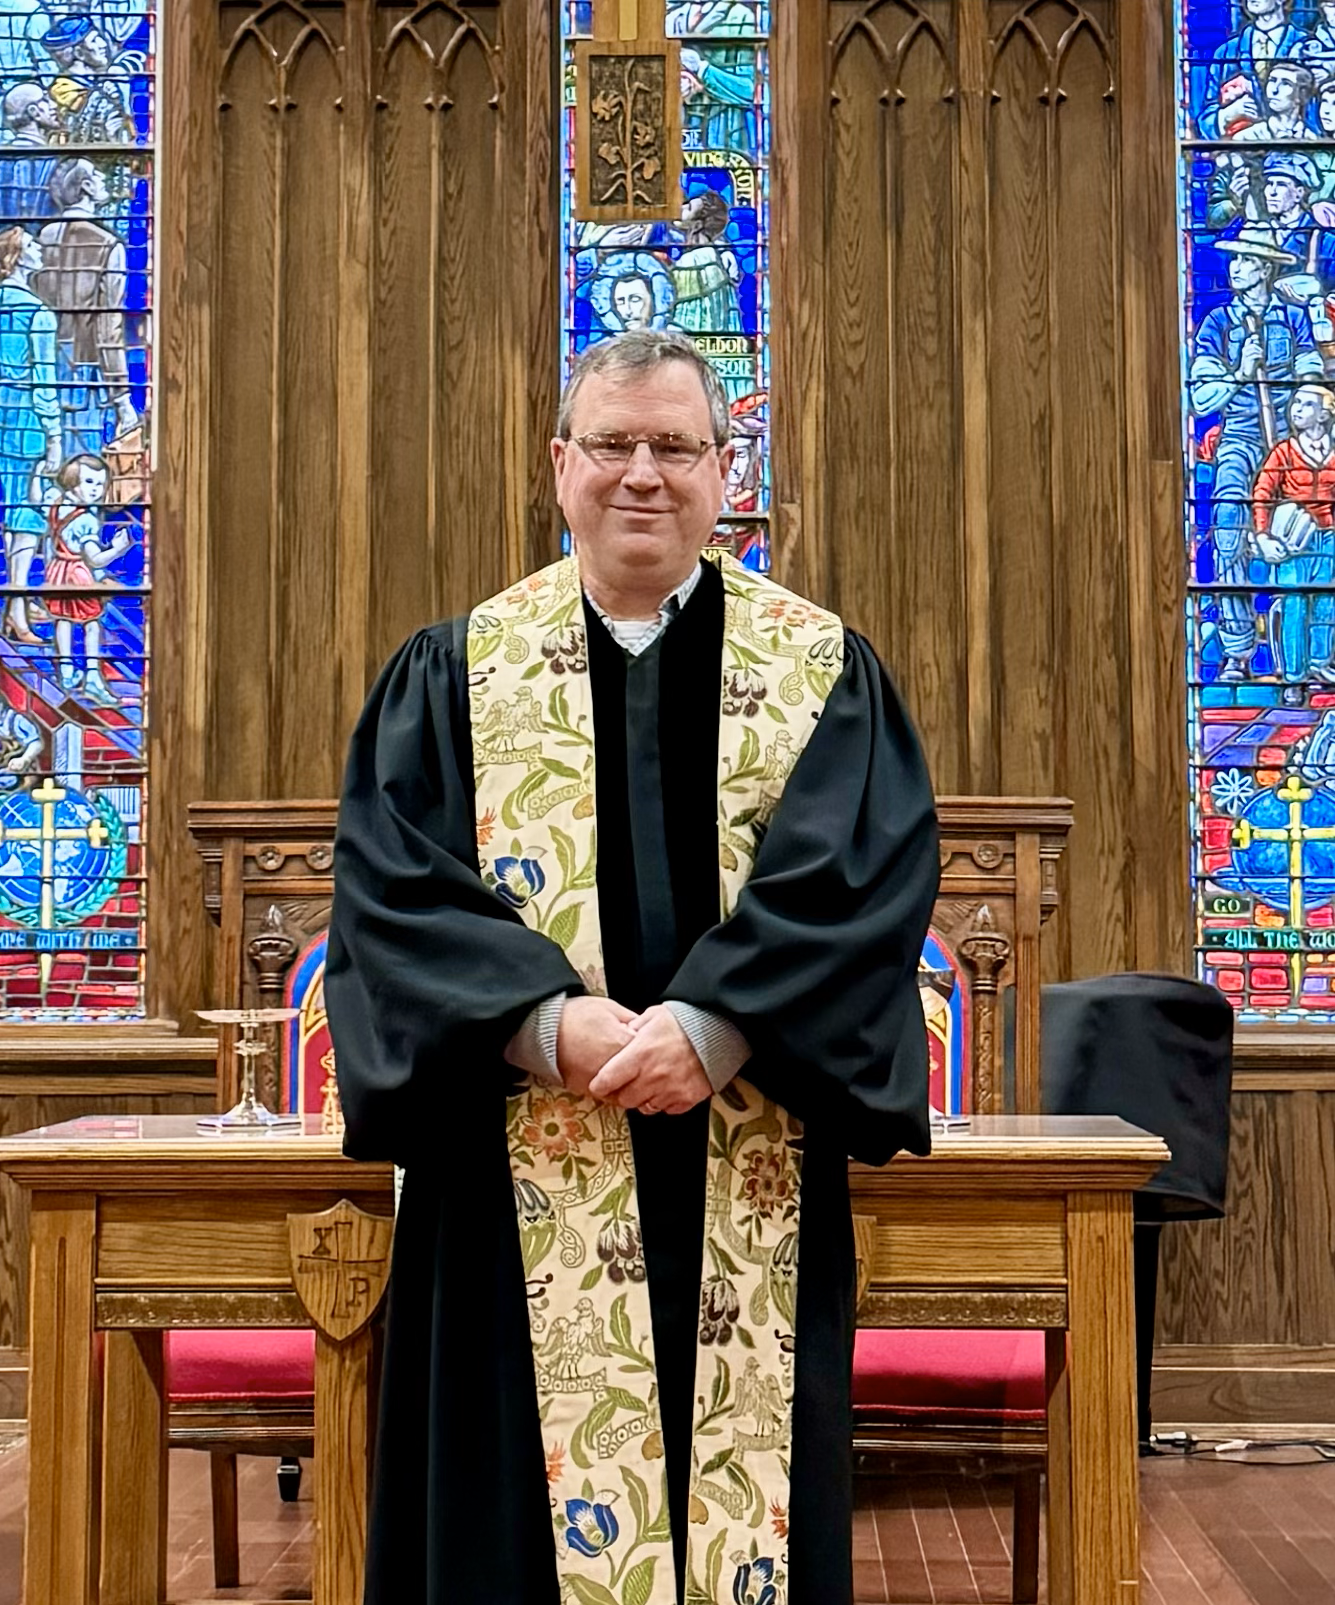 Rev. John Brock